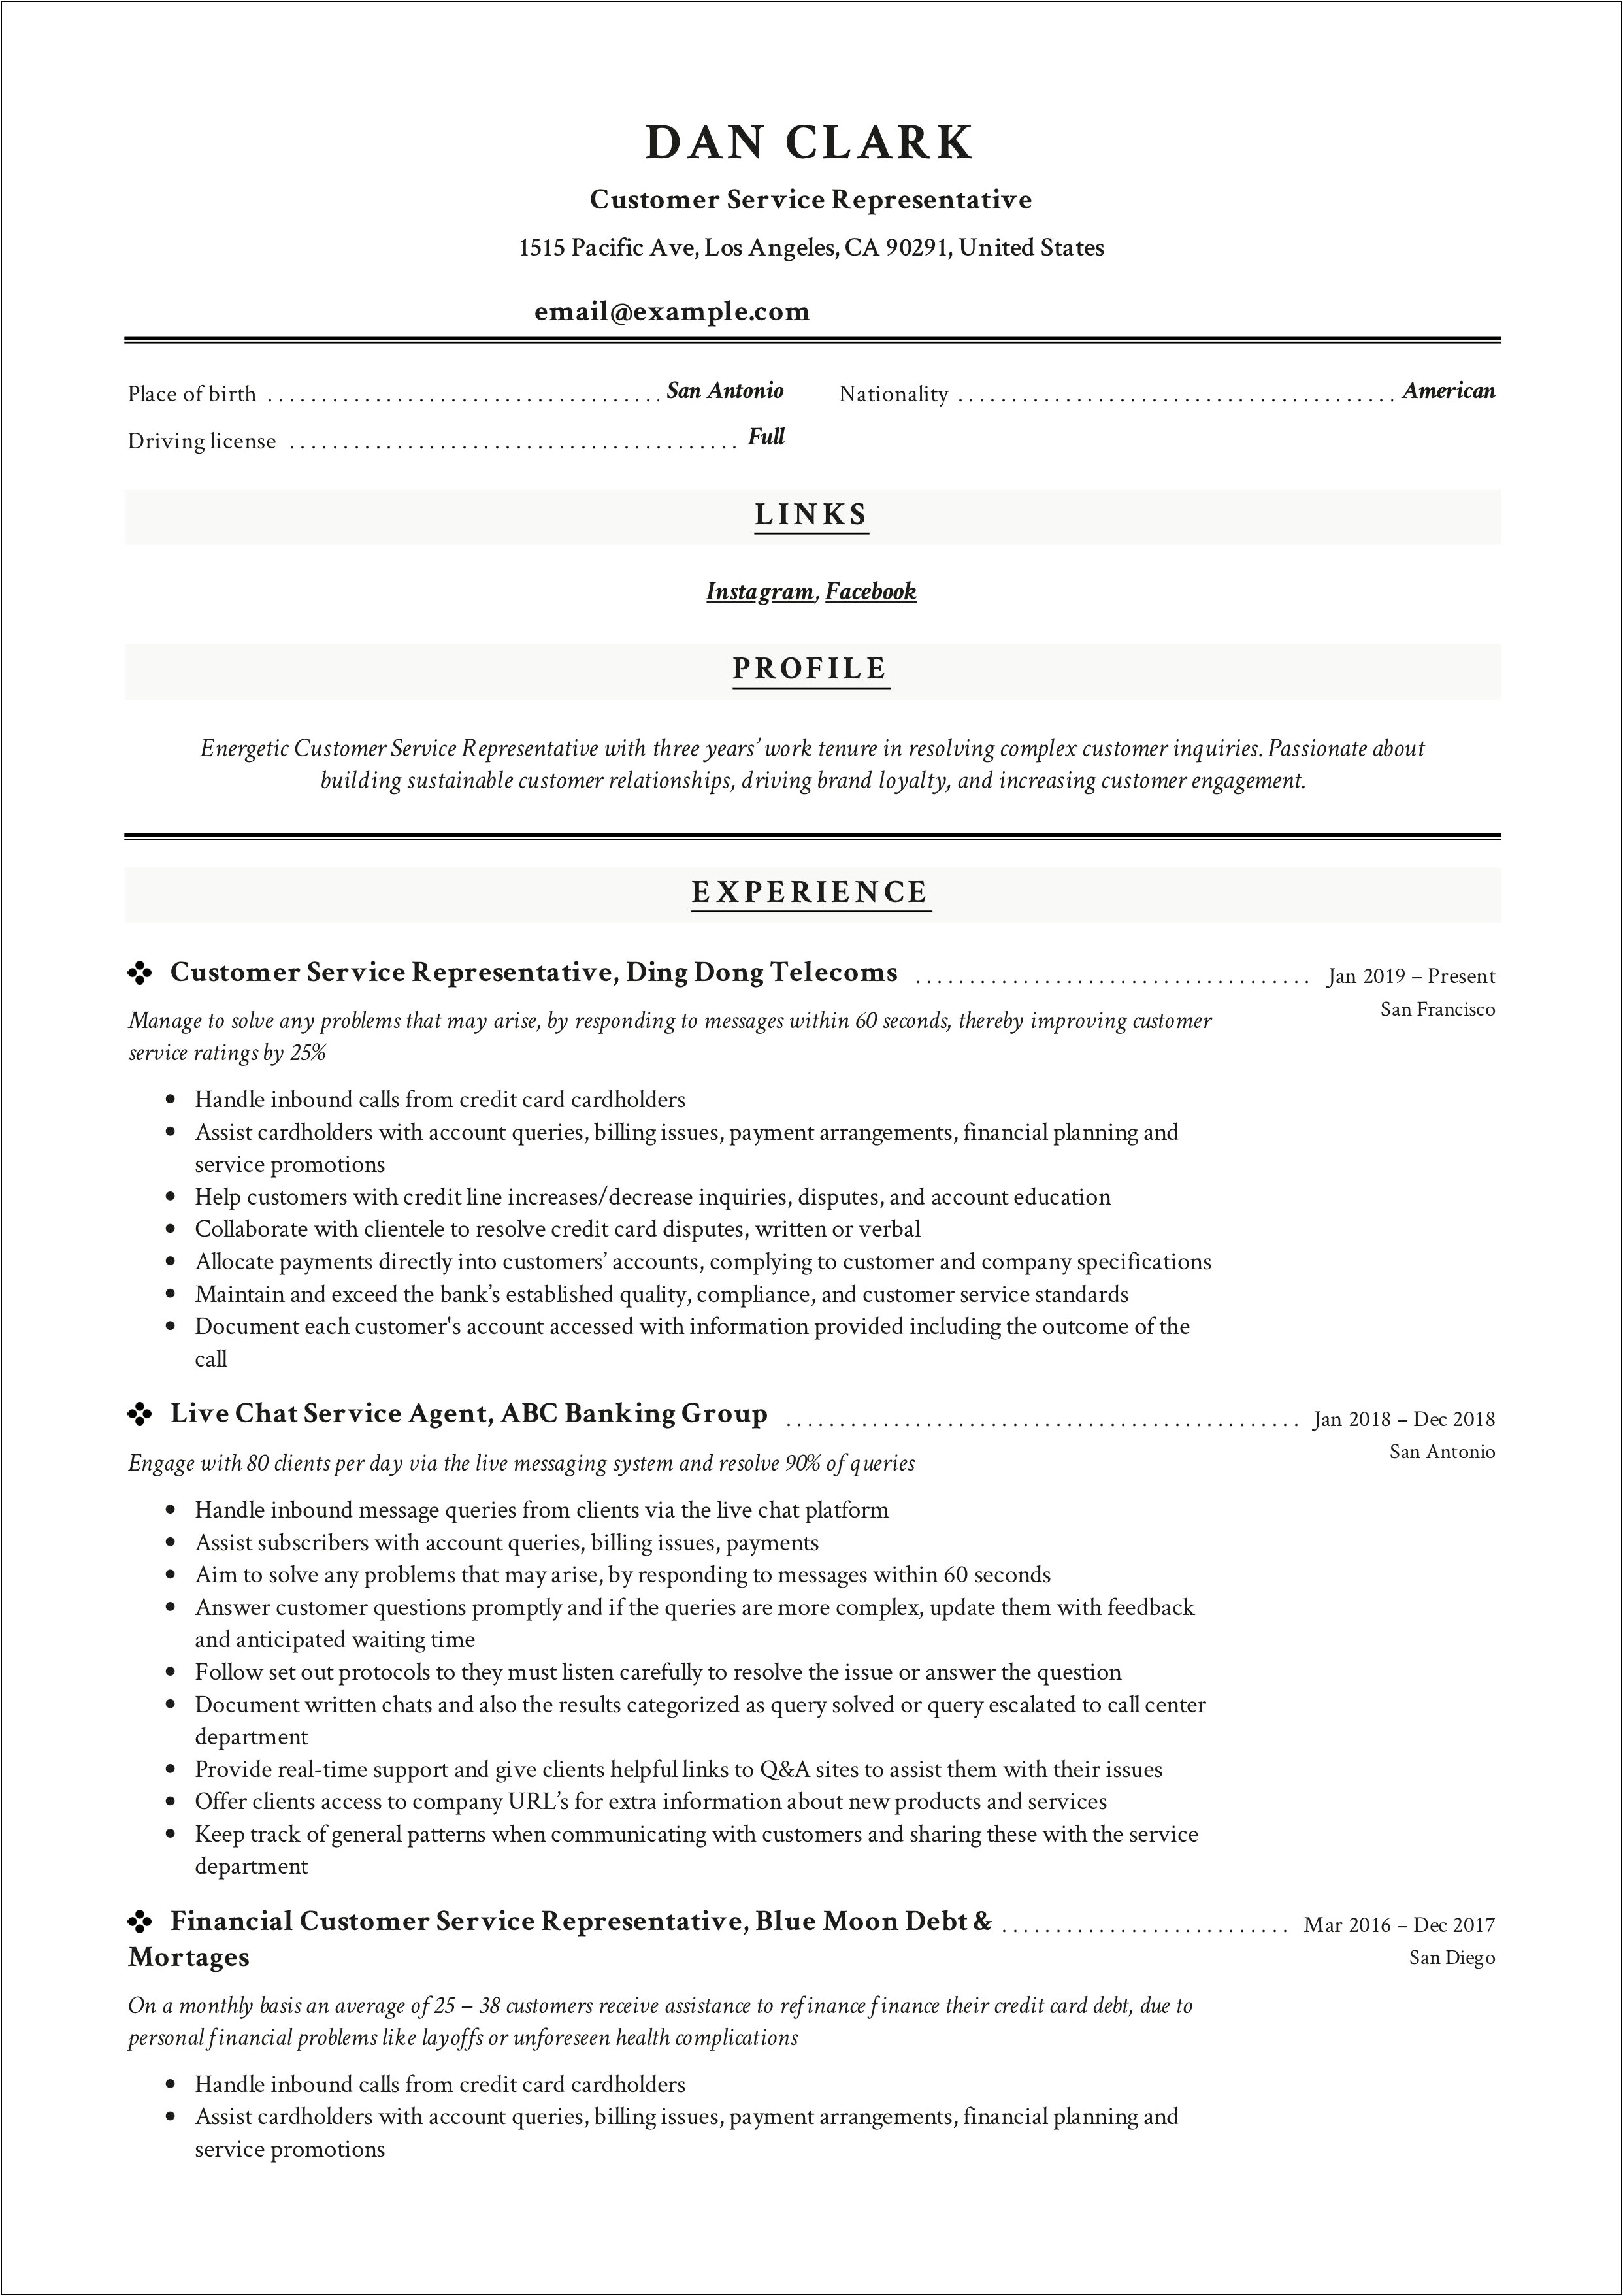 Customer Service Associate Job Description For Resume